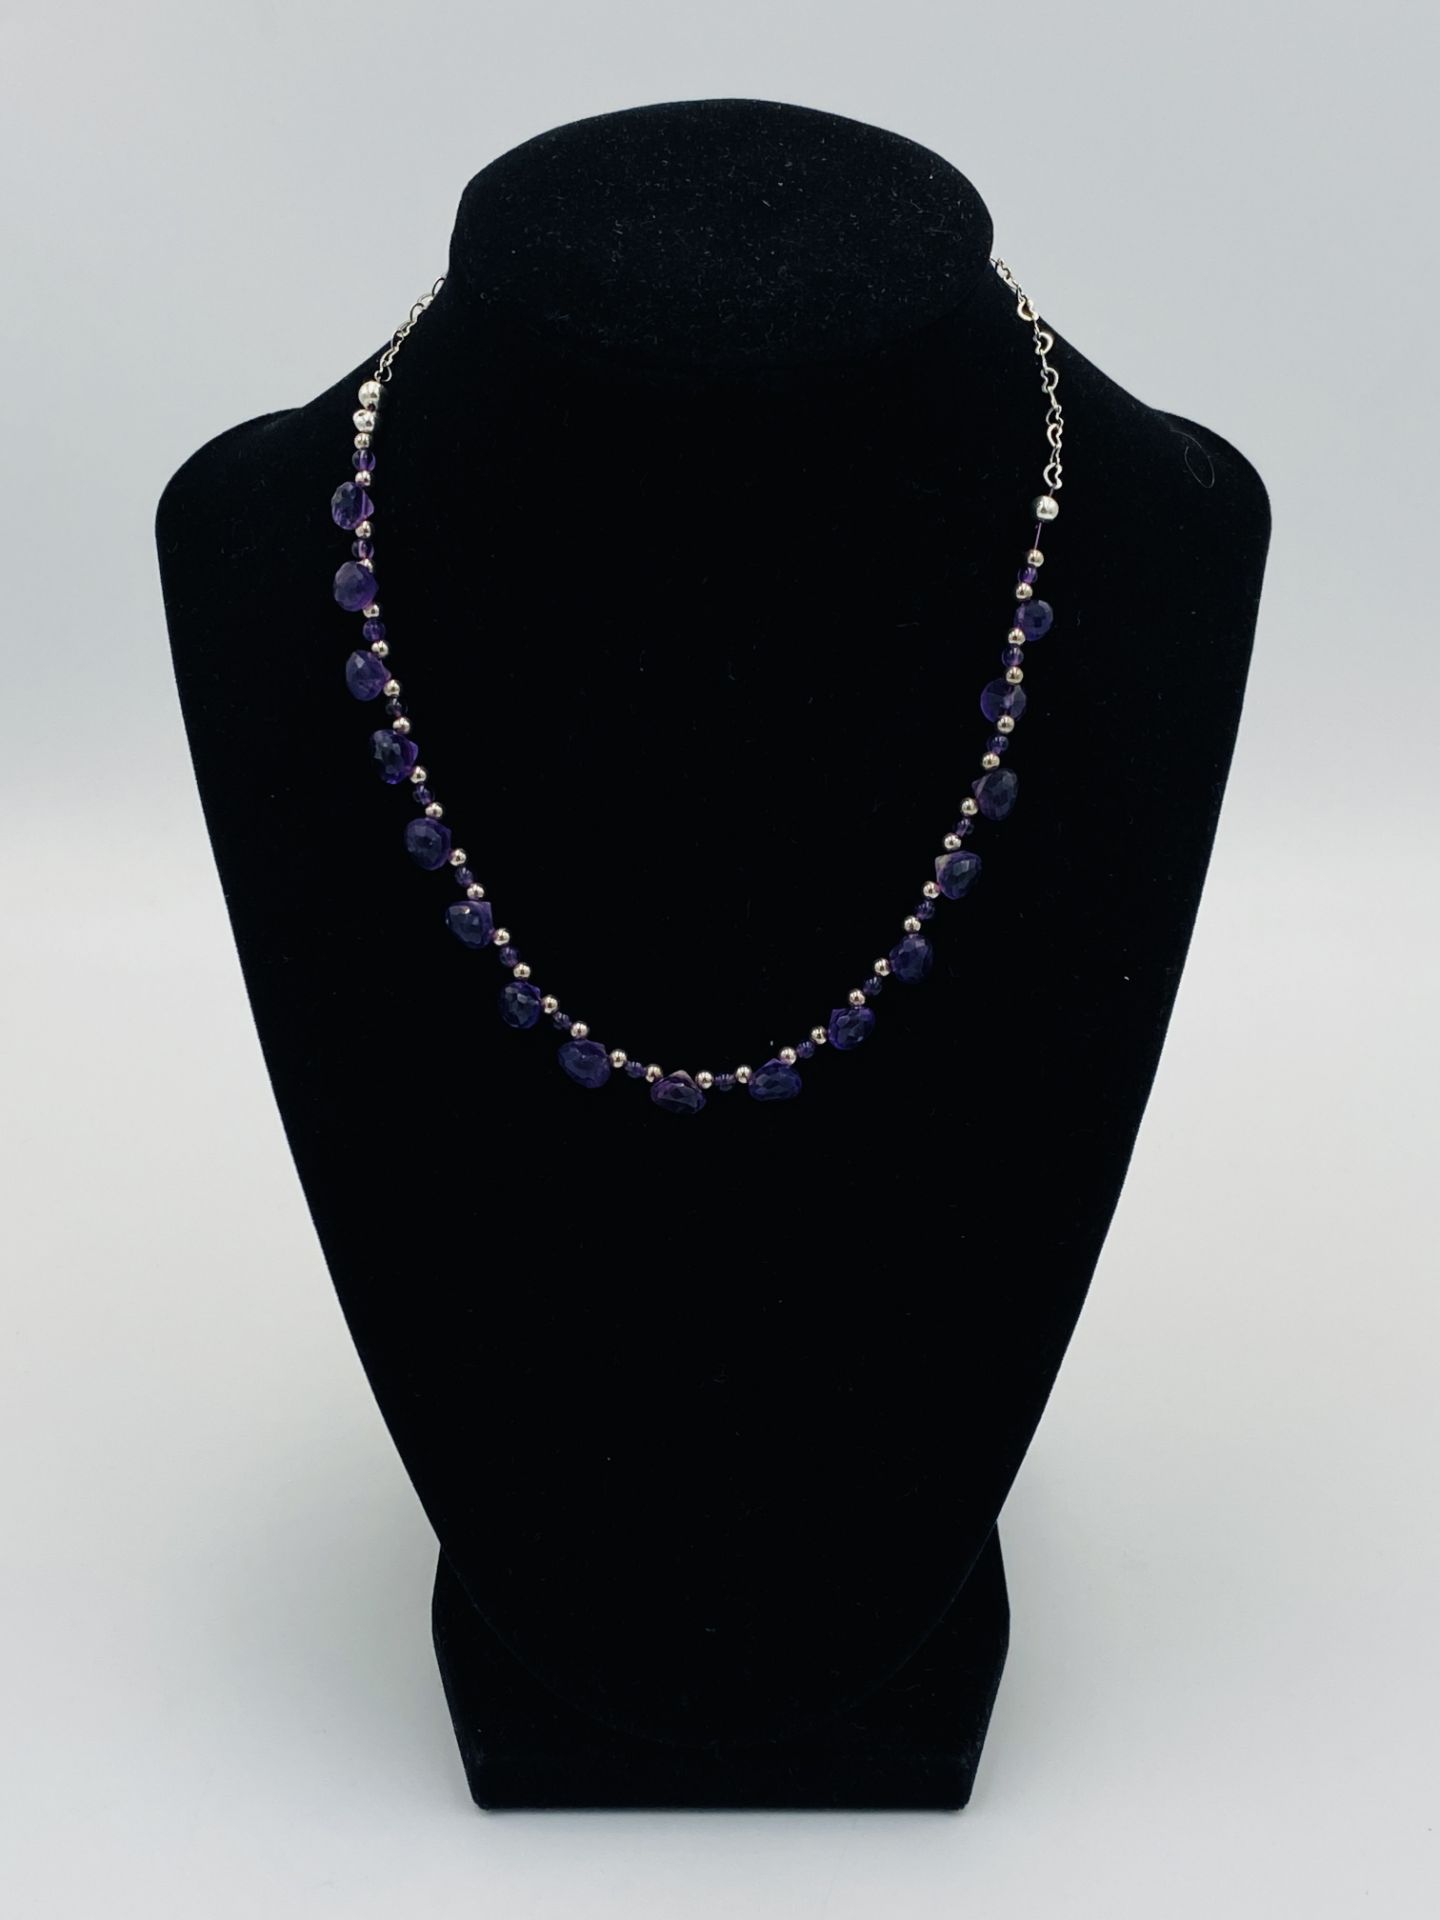 Ten semi precious stone necklaces - Image 3 of 11